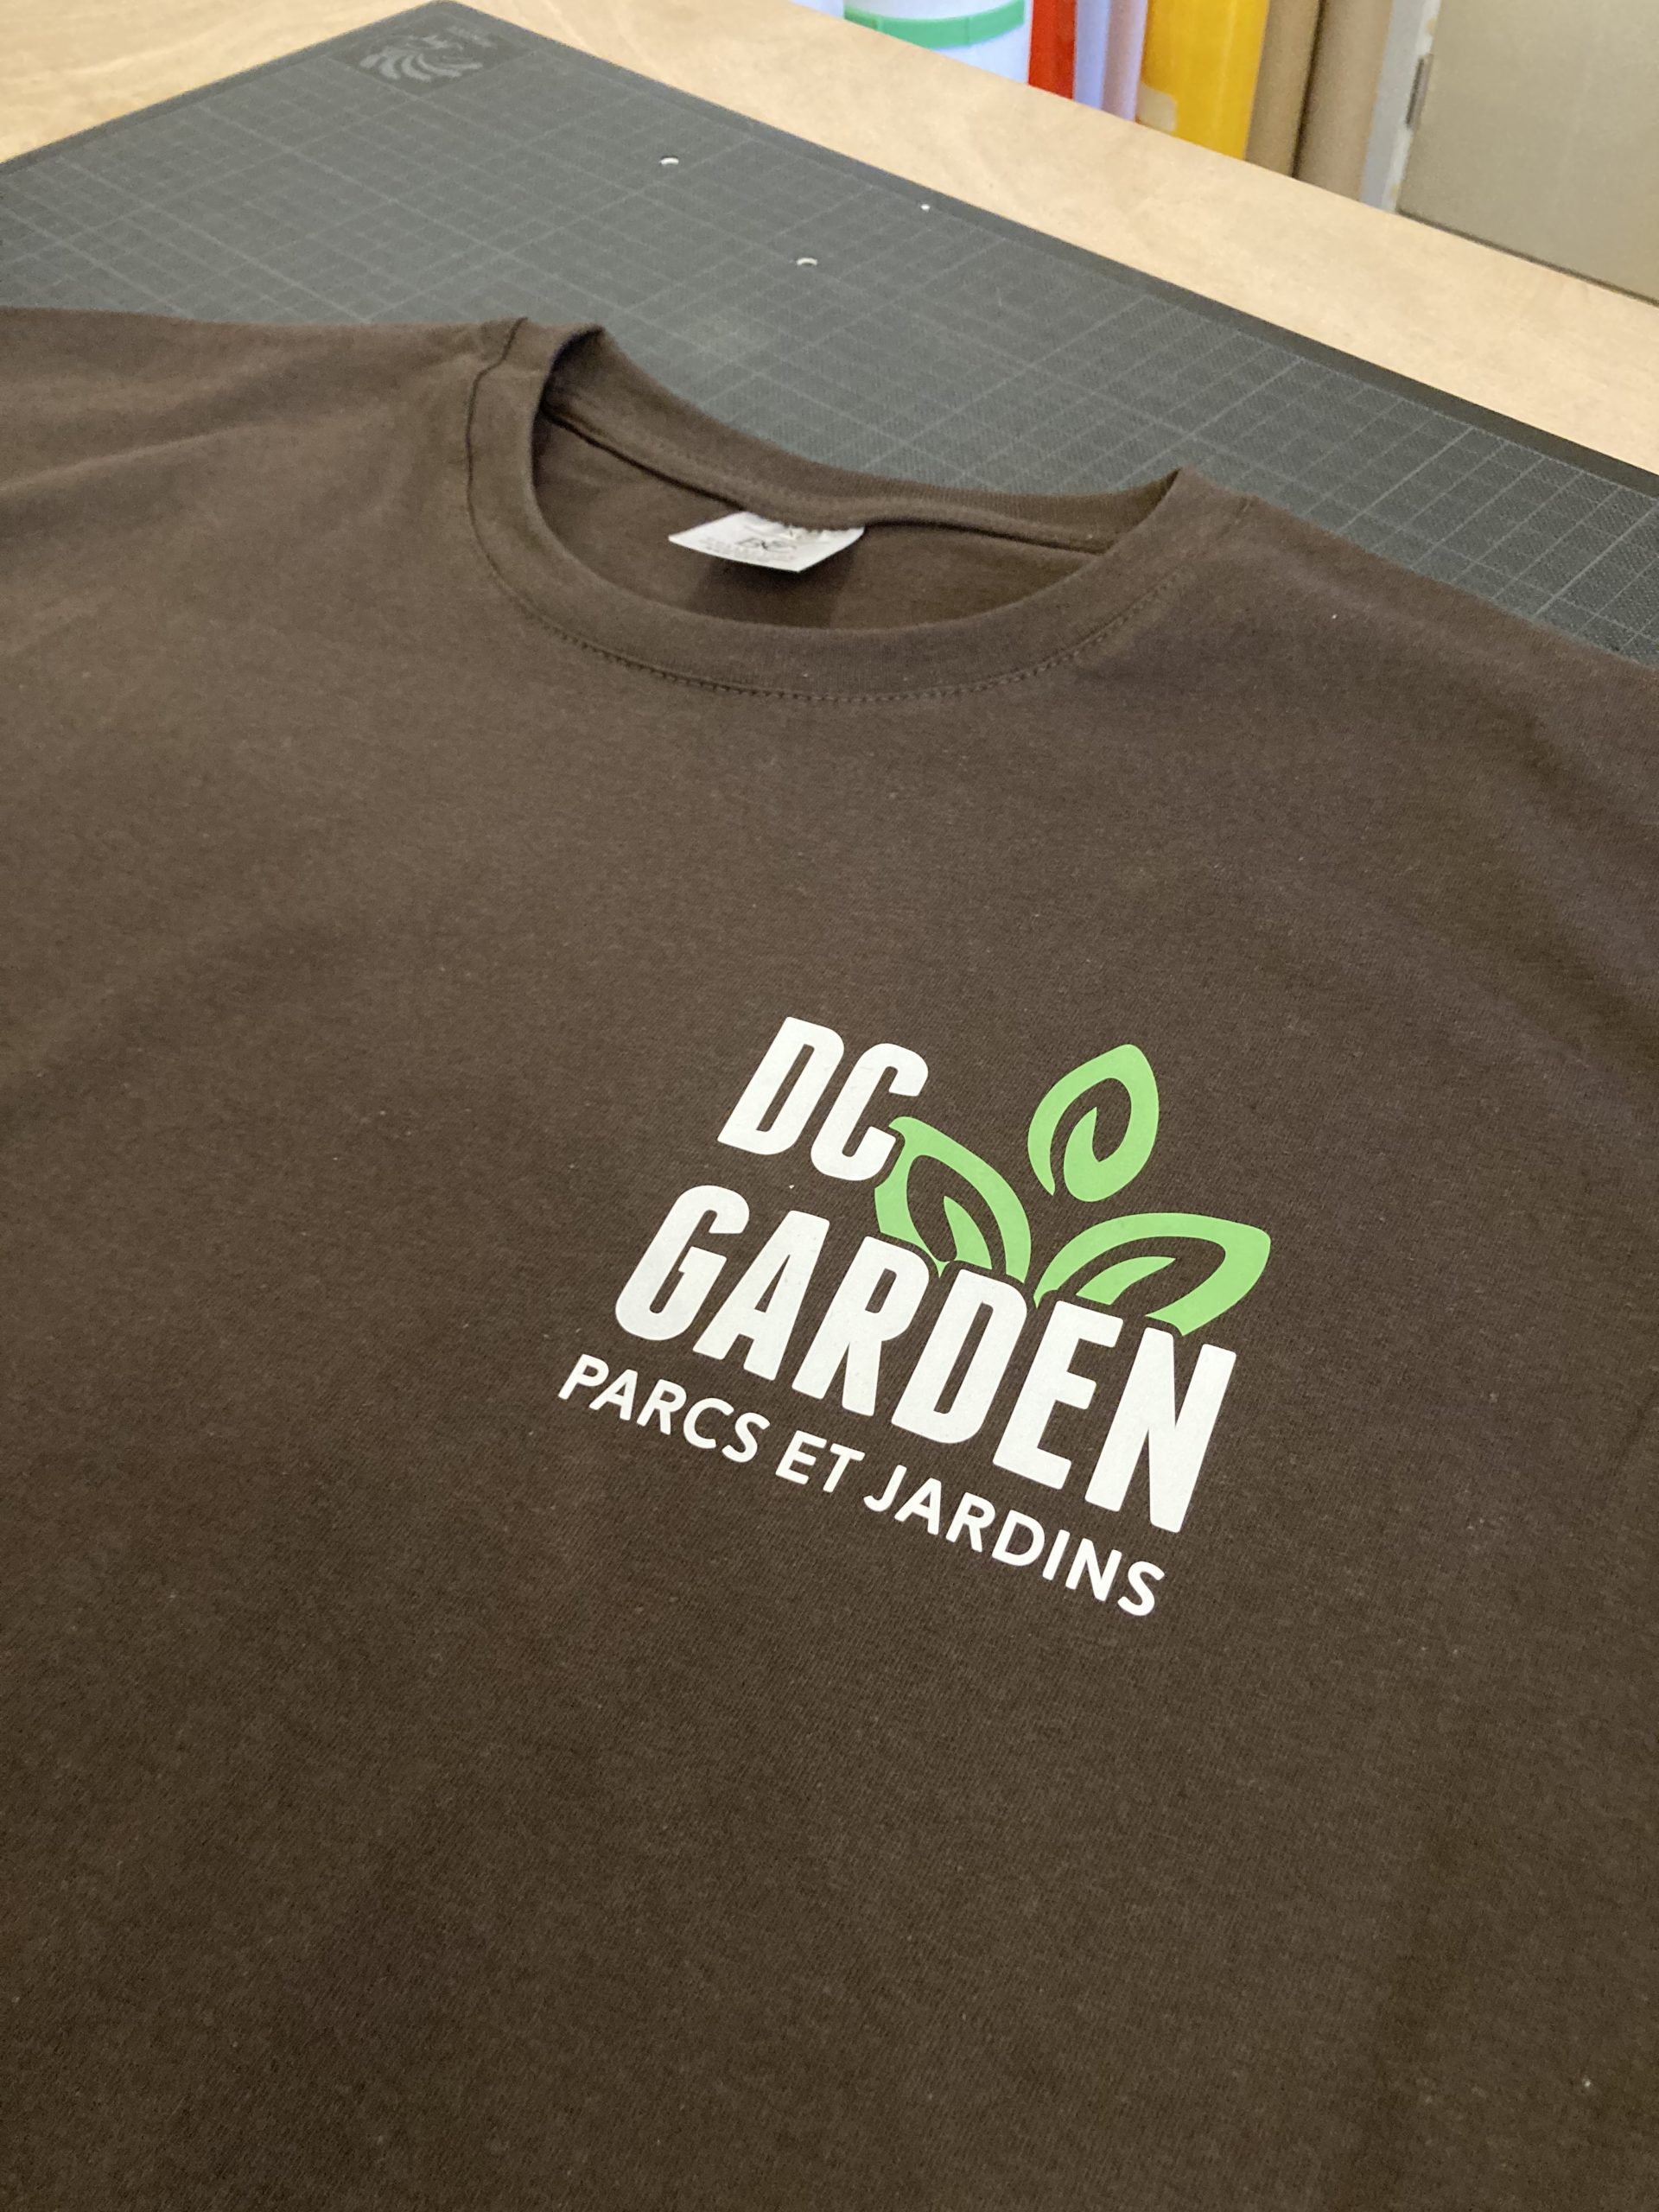 DC Garden impressions textiles